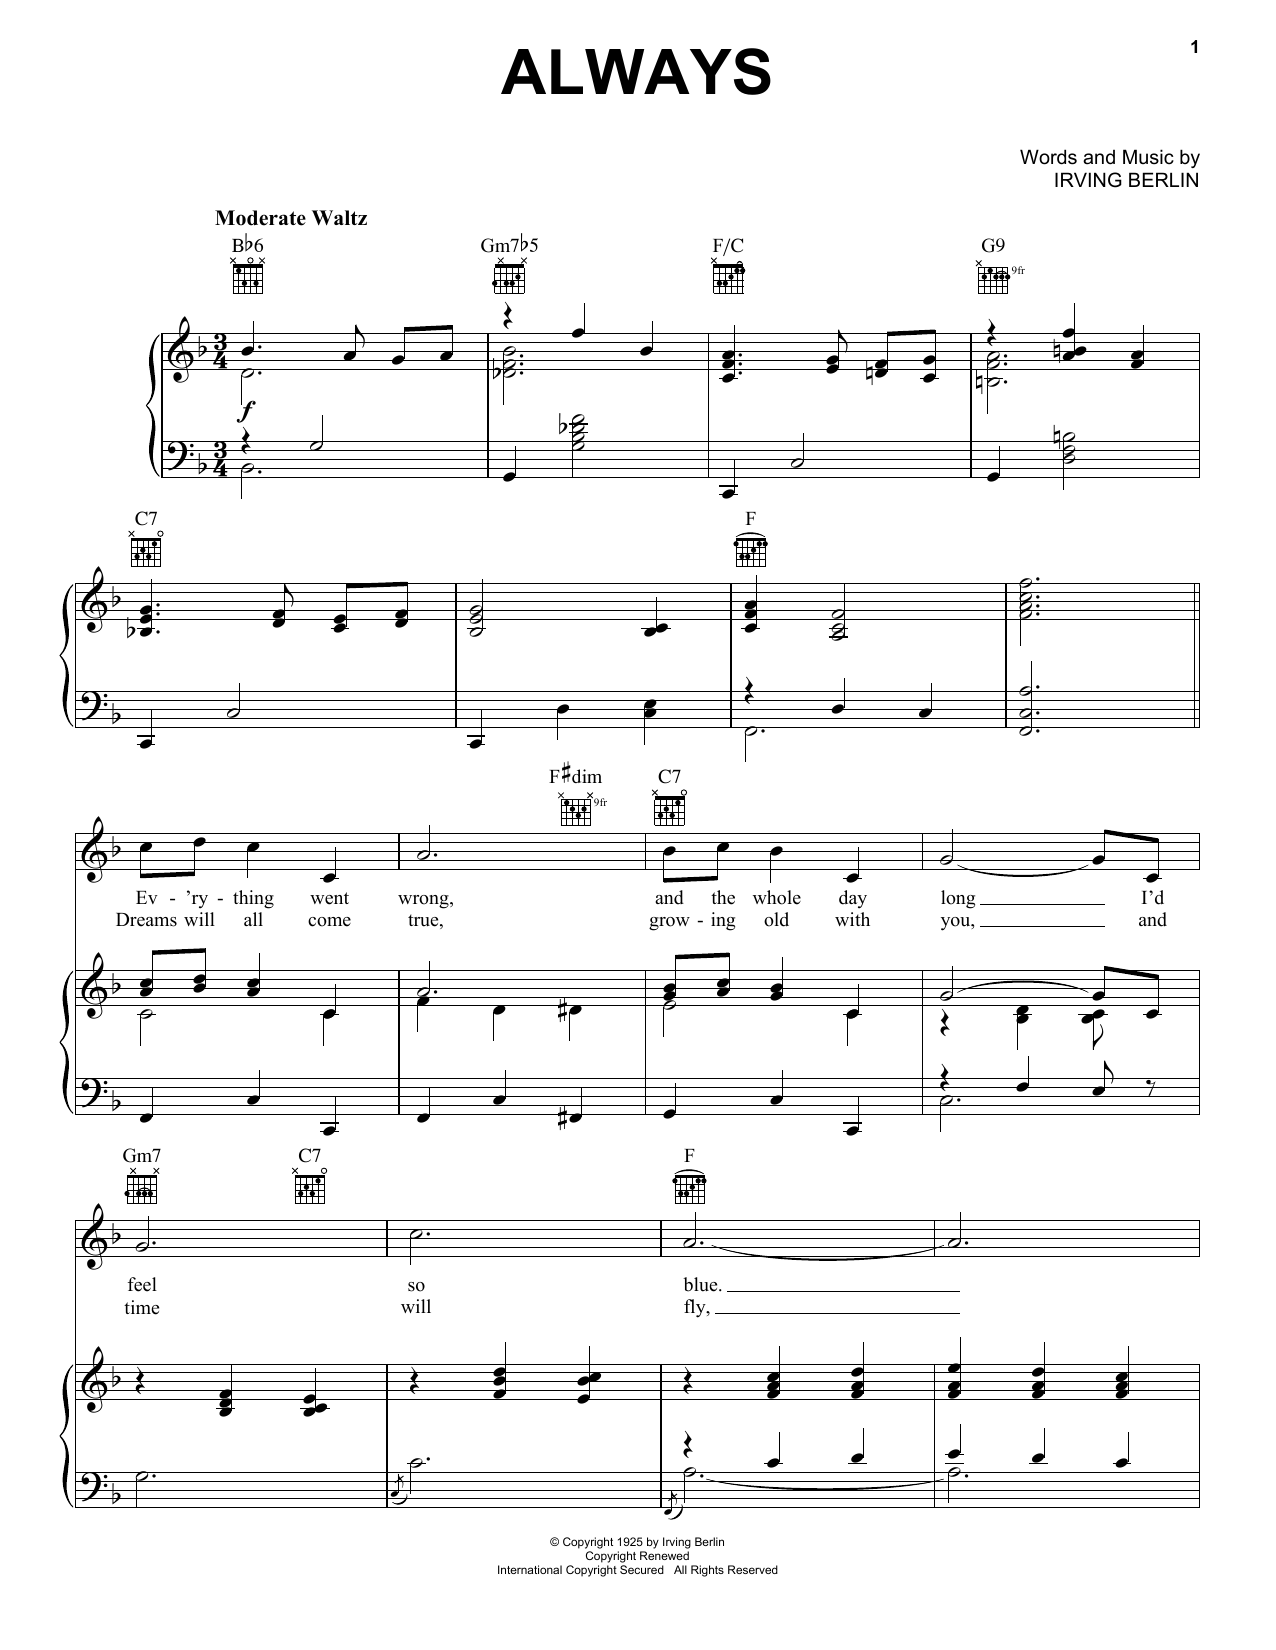 Billie Holiday Always sheet music notes printable PDF score